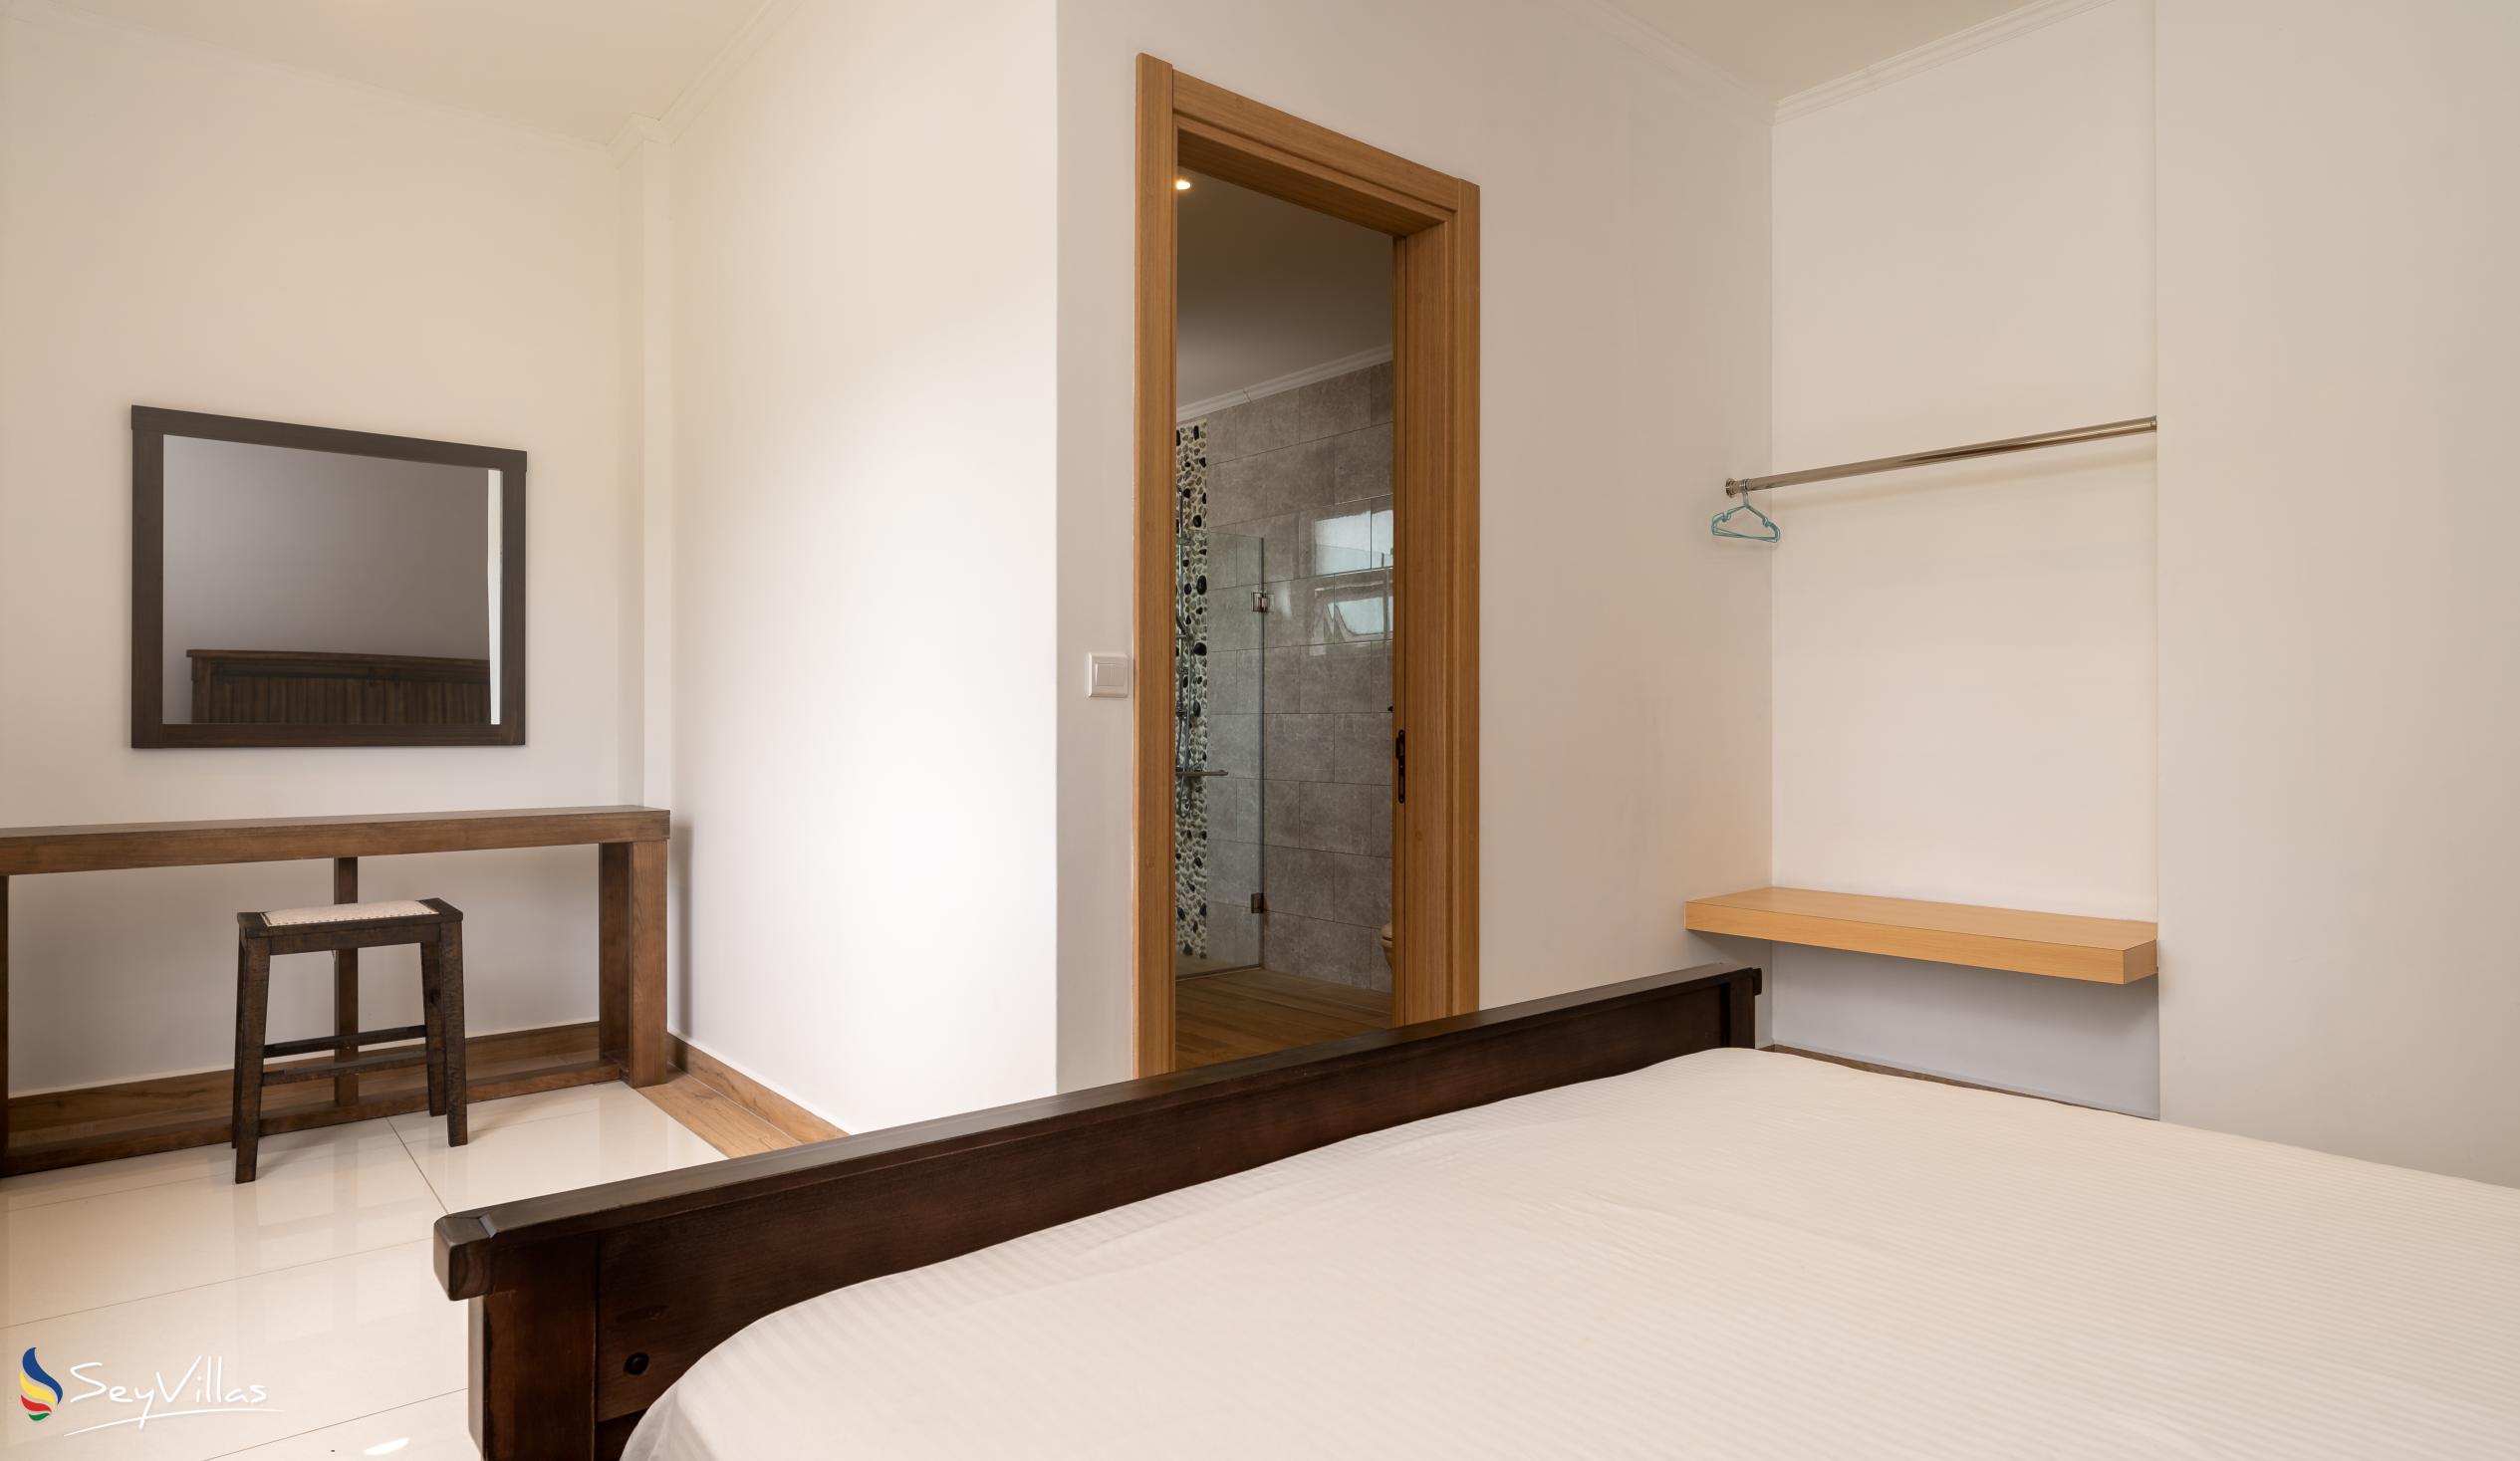 Foto 34: Royale Suites by Arc Royale Luxury Apartments - Appartement 2 chambres - Mahé (Seychelles)